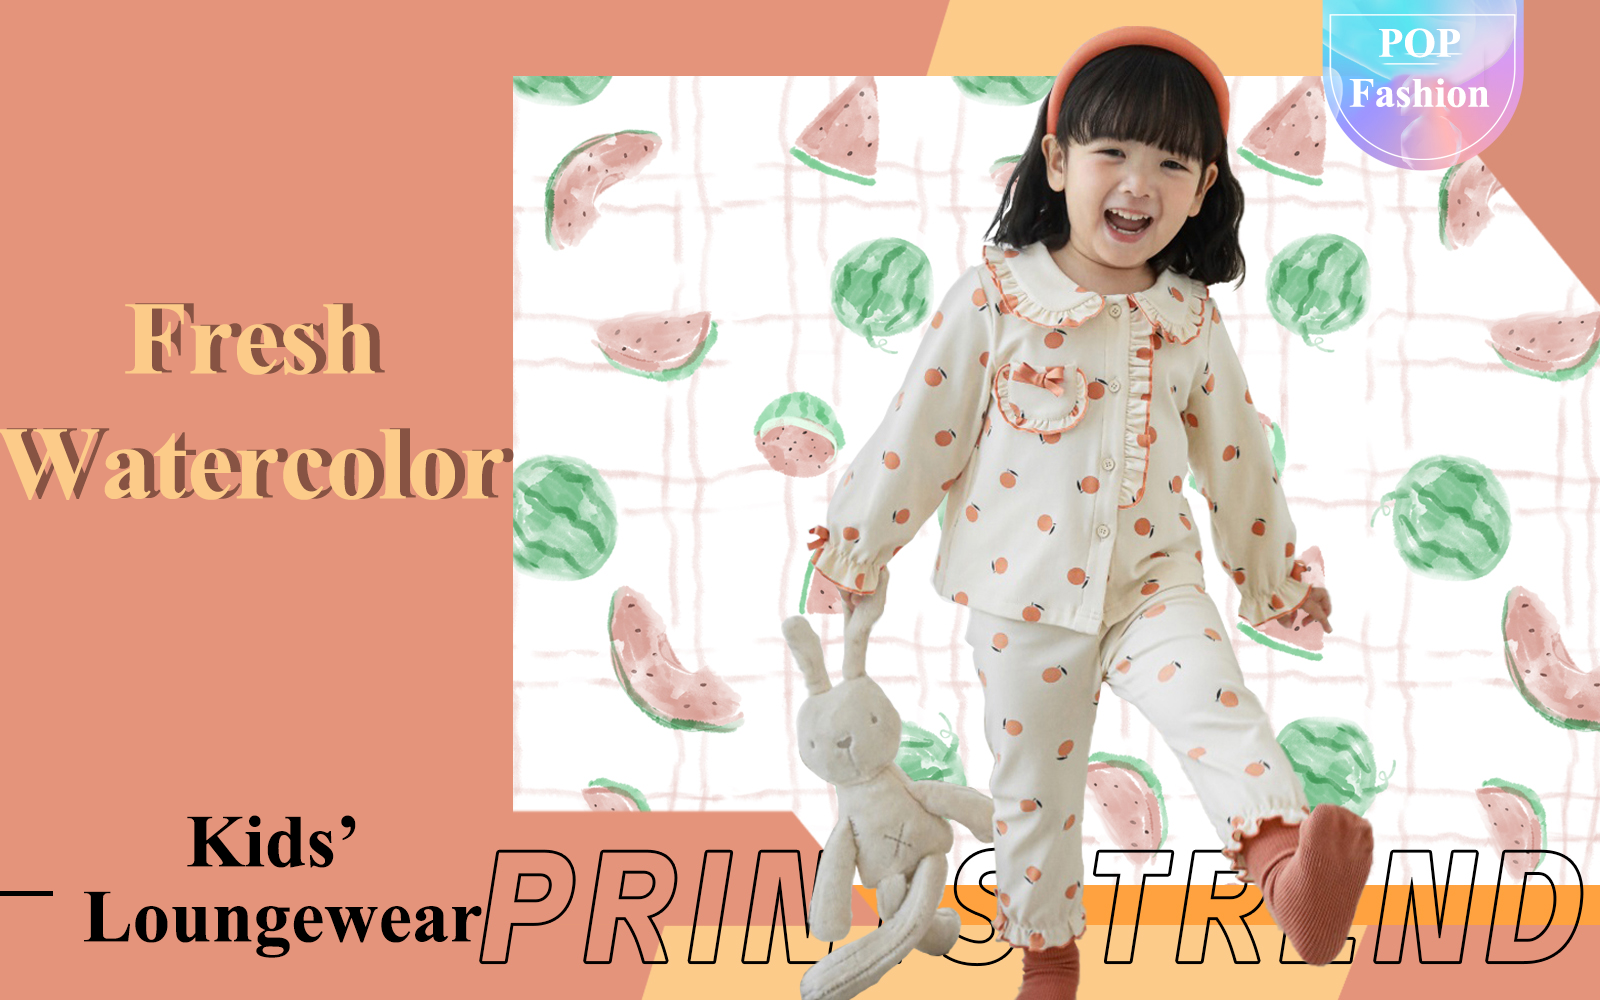 Fresh Watercolor -- The Pattern Trend for Kids' Loungewear